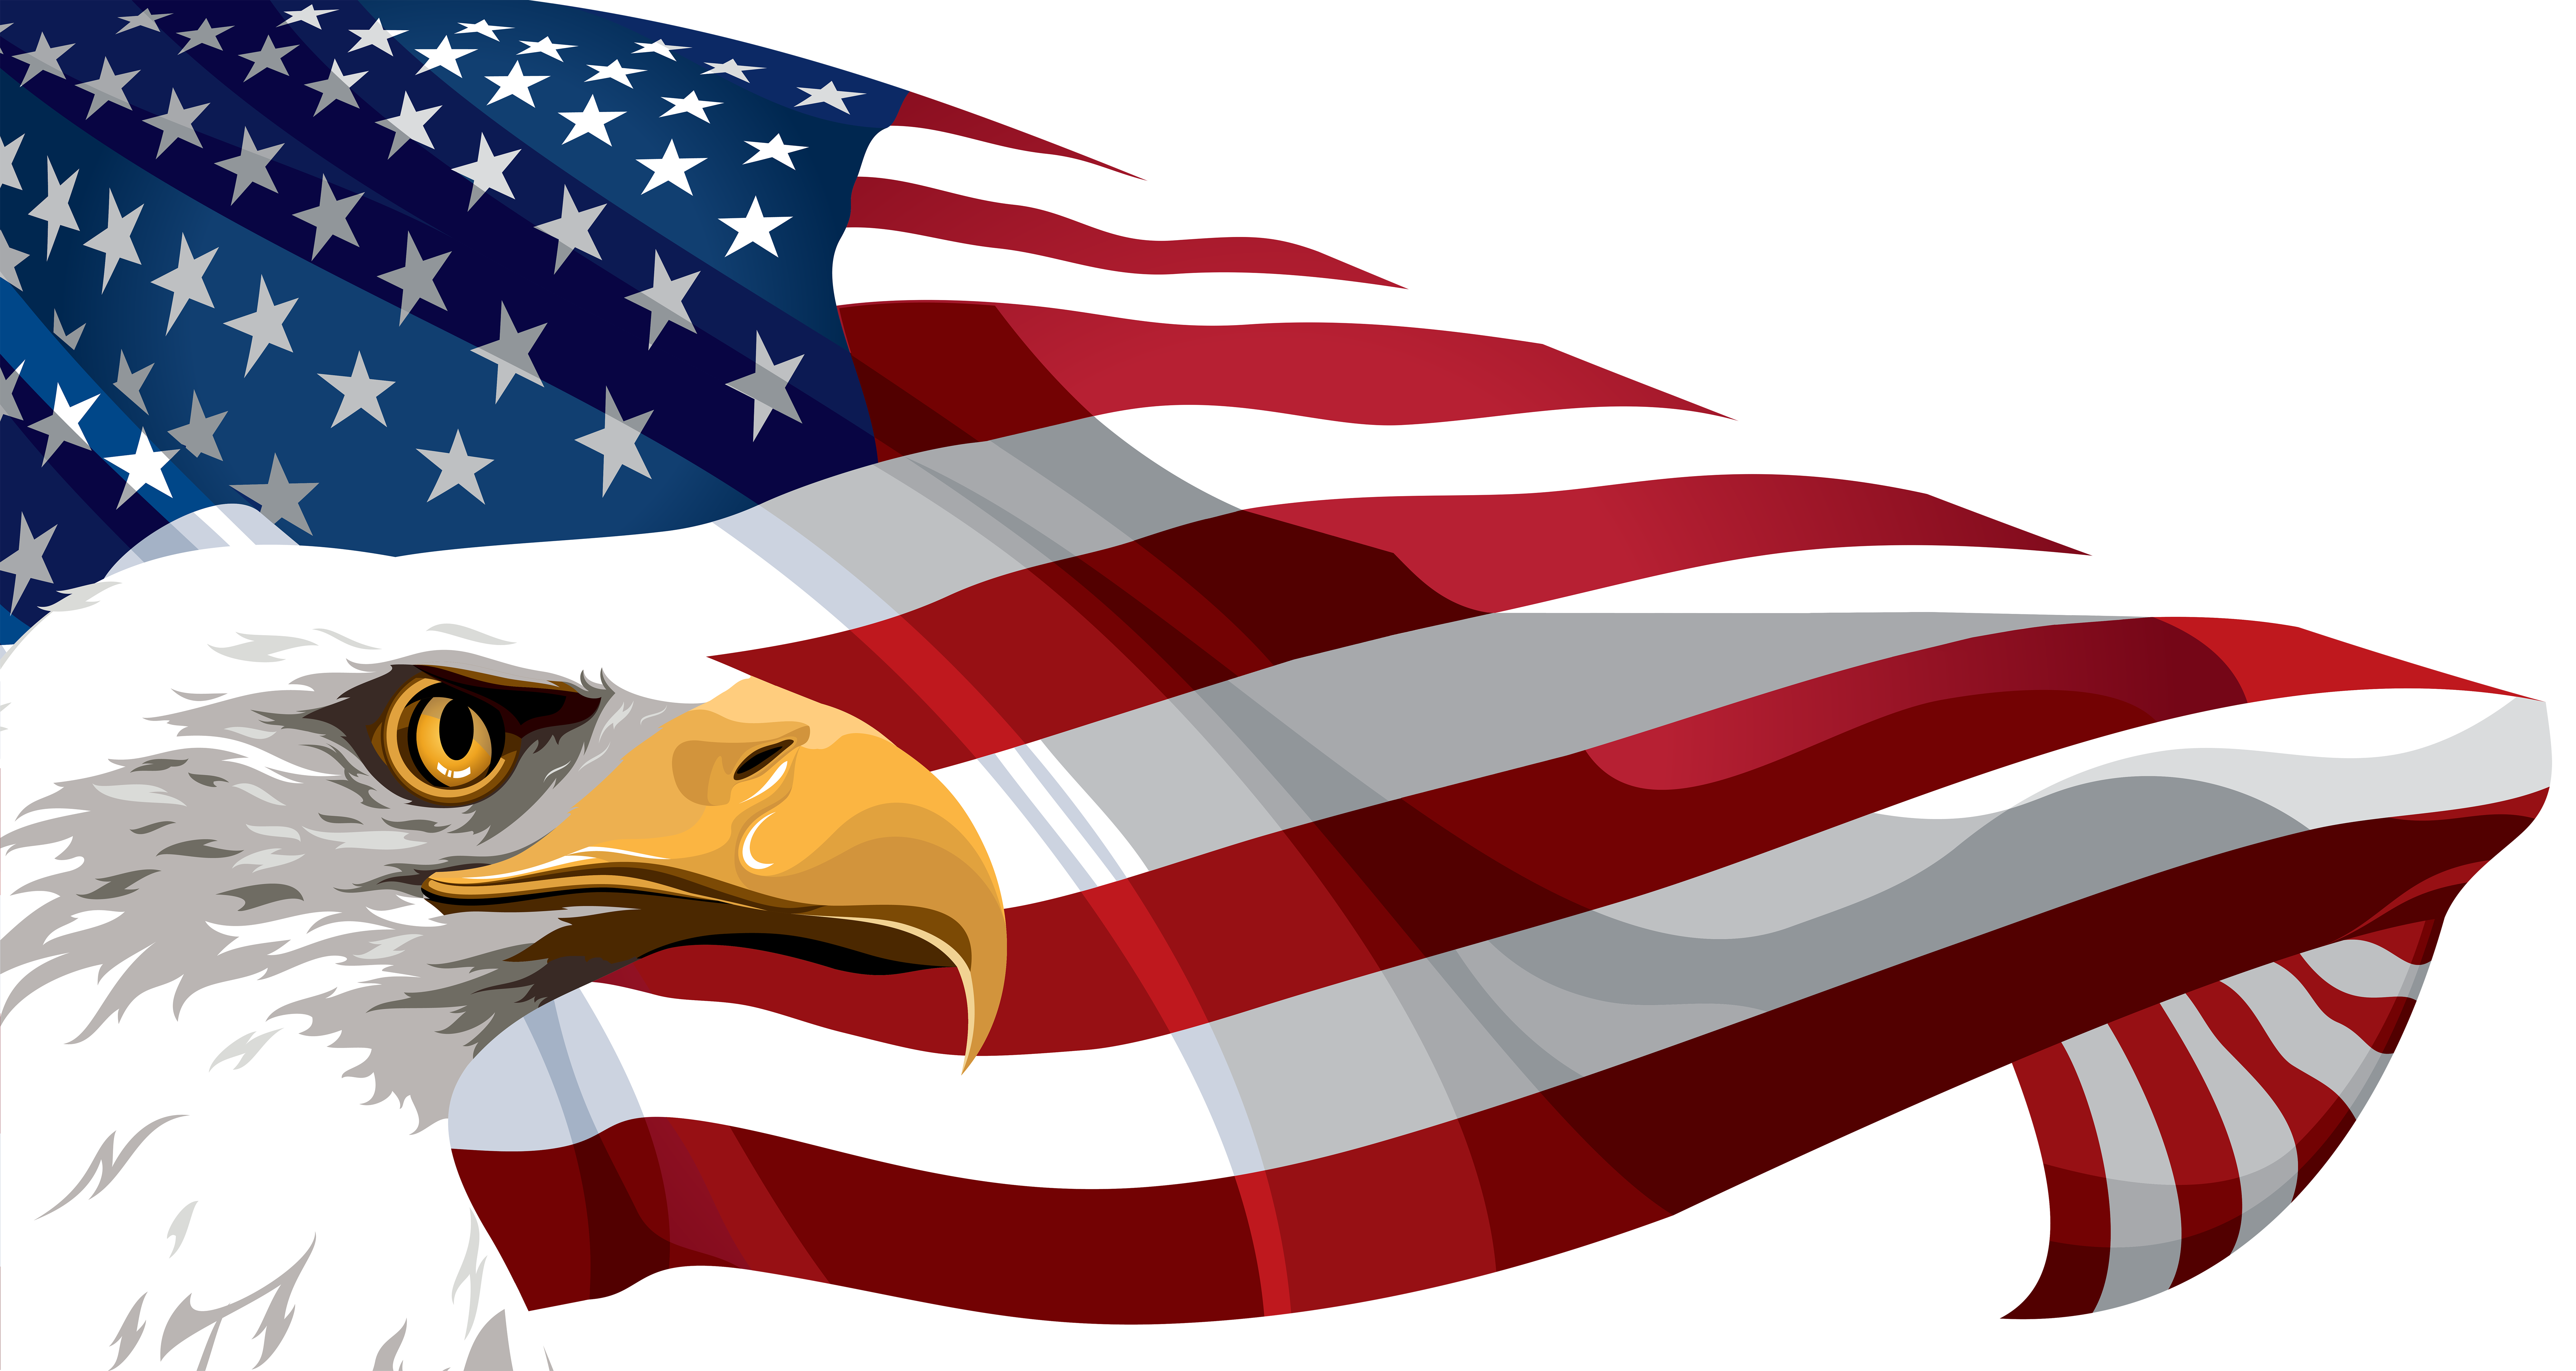 American Flag Eagle PNG Transparent Images Free Download